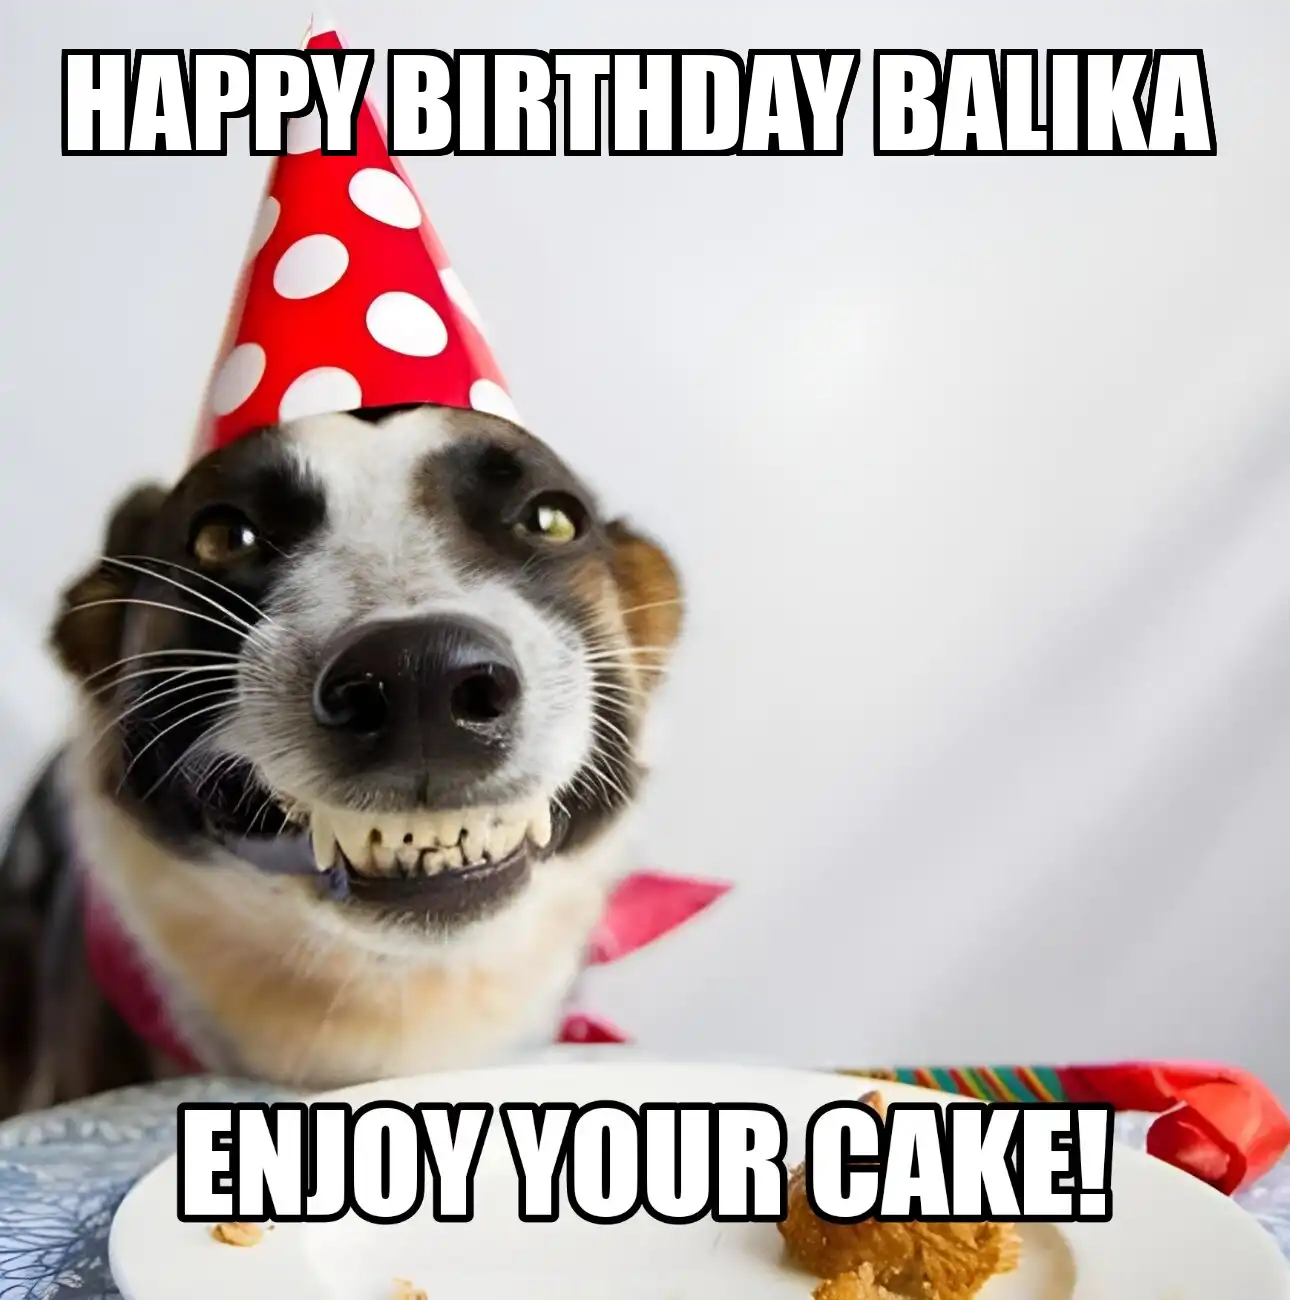 Happy Birthday Balika Enjoy Your Cake Dog Meme